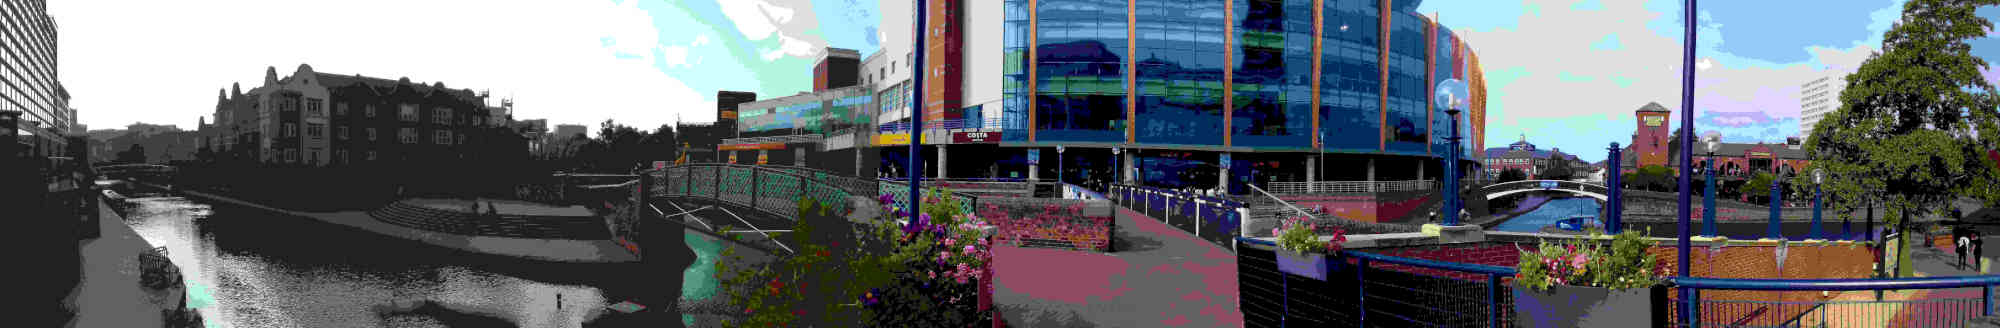 ImagesBirmingham/Birmingham Broad Street Barclaycard Arena Panorama.jpg